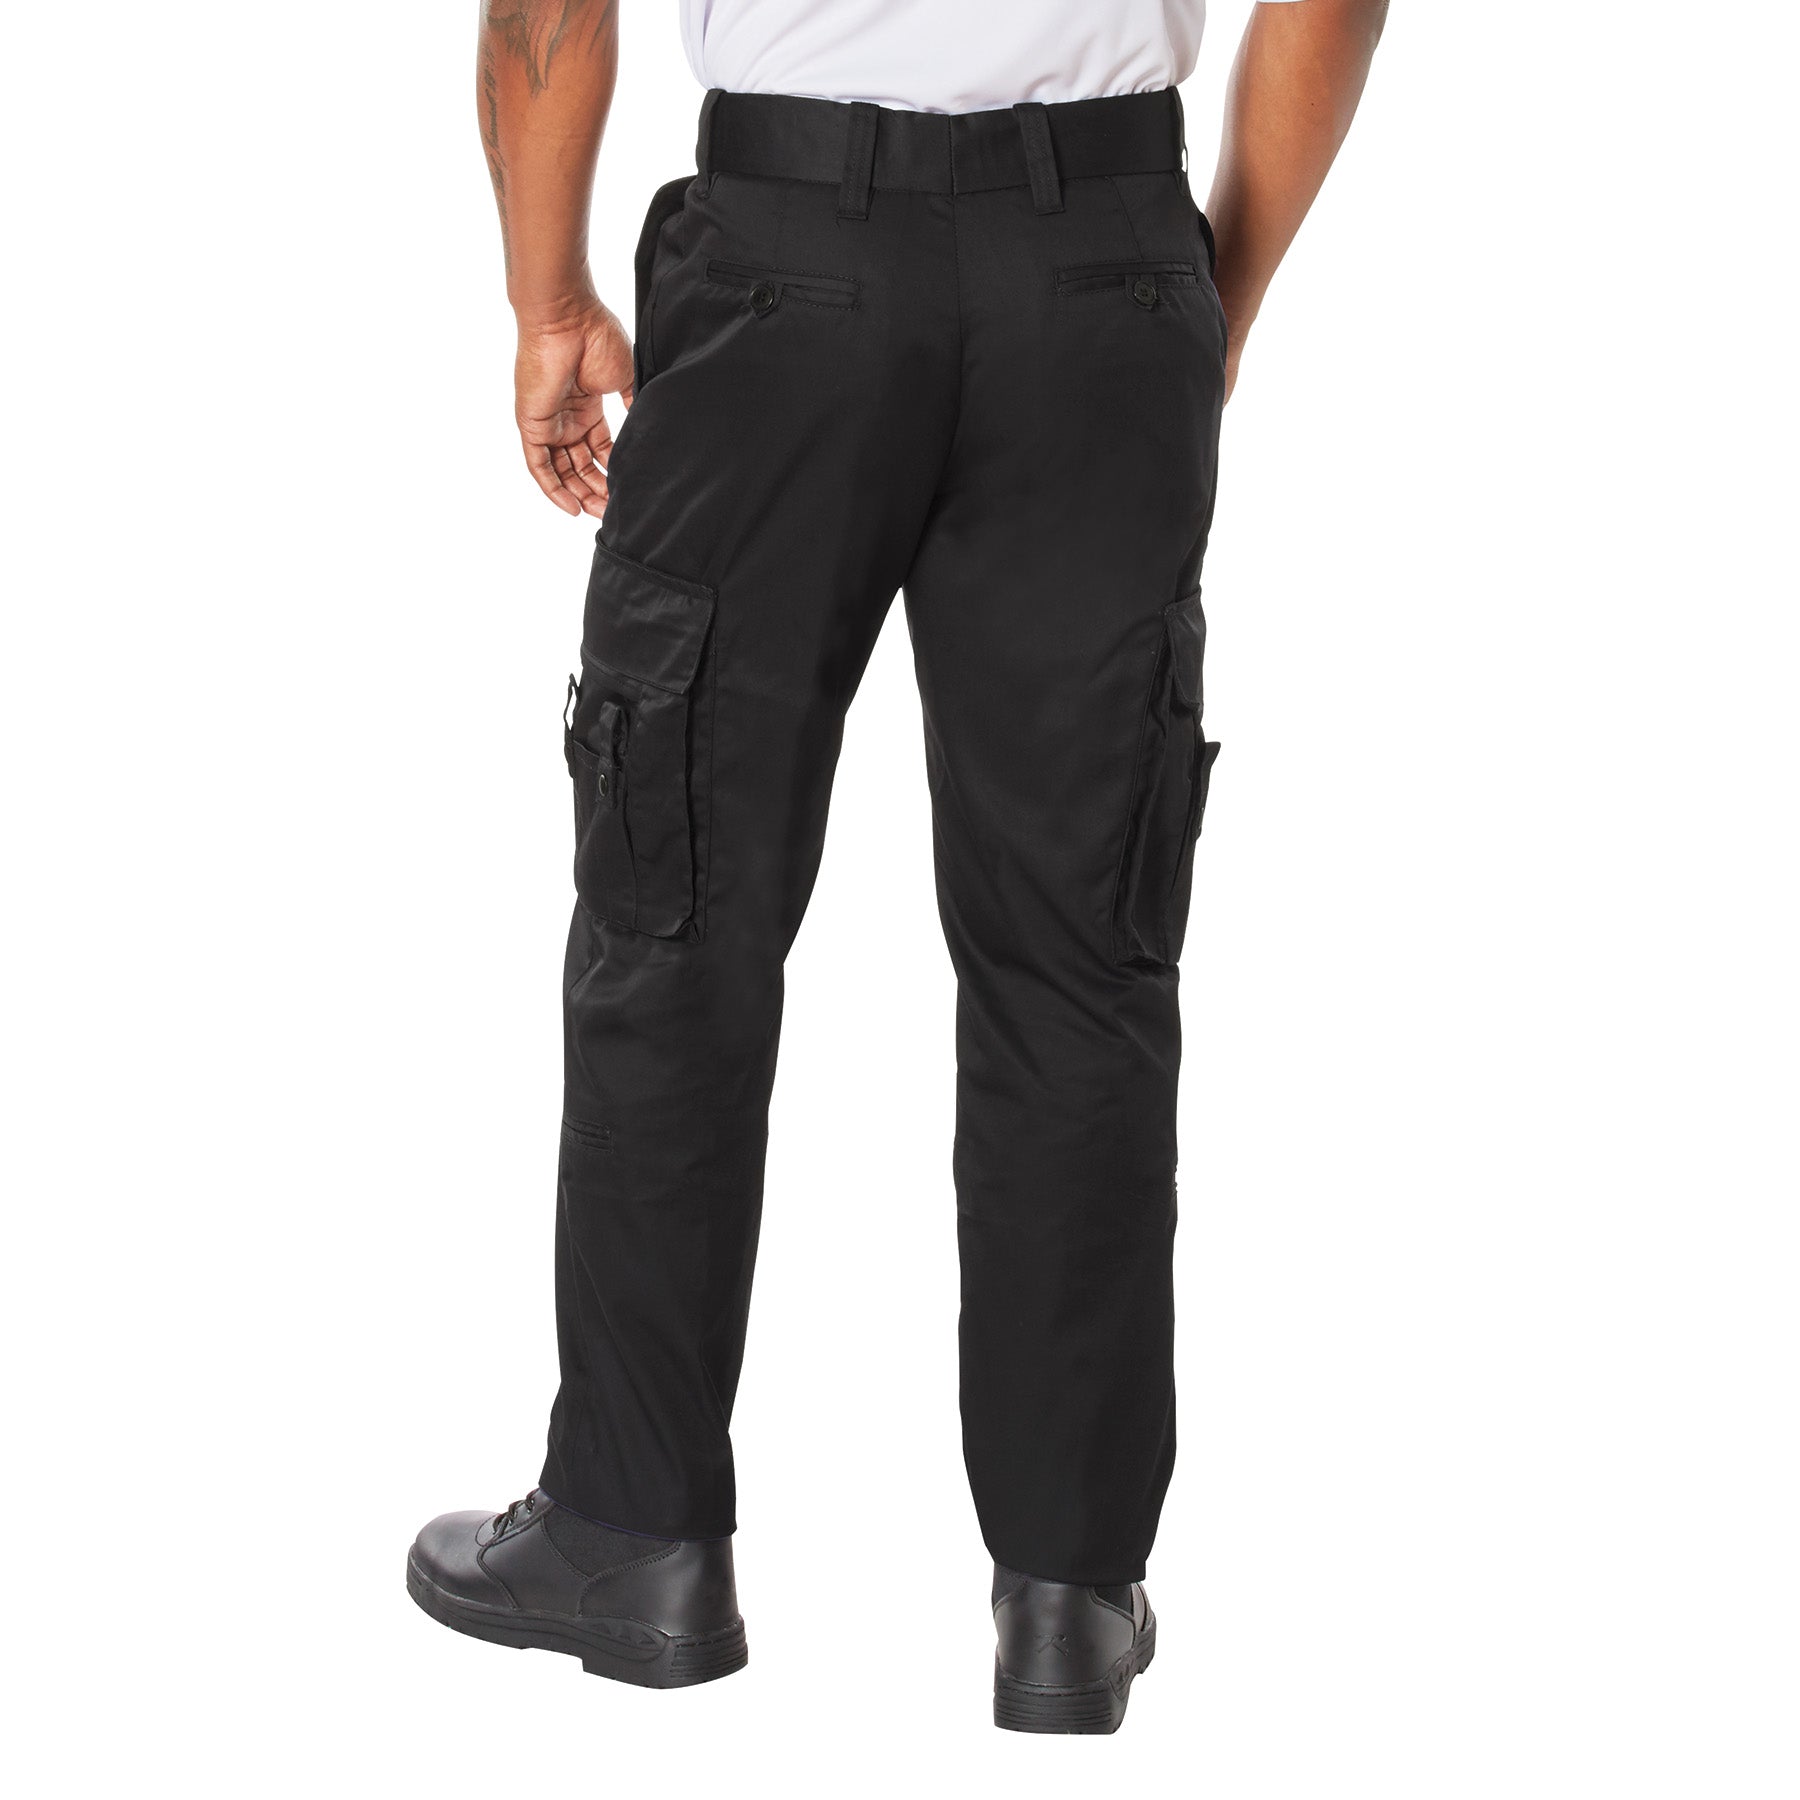 [Public Safety] Poly/Cotton Deluxe EMT Tactical Pants